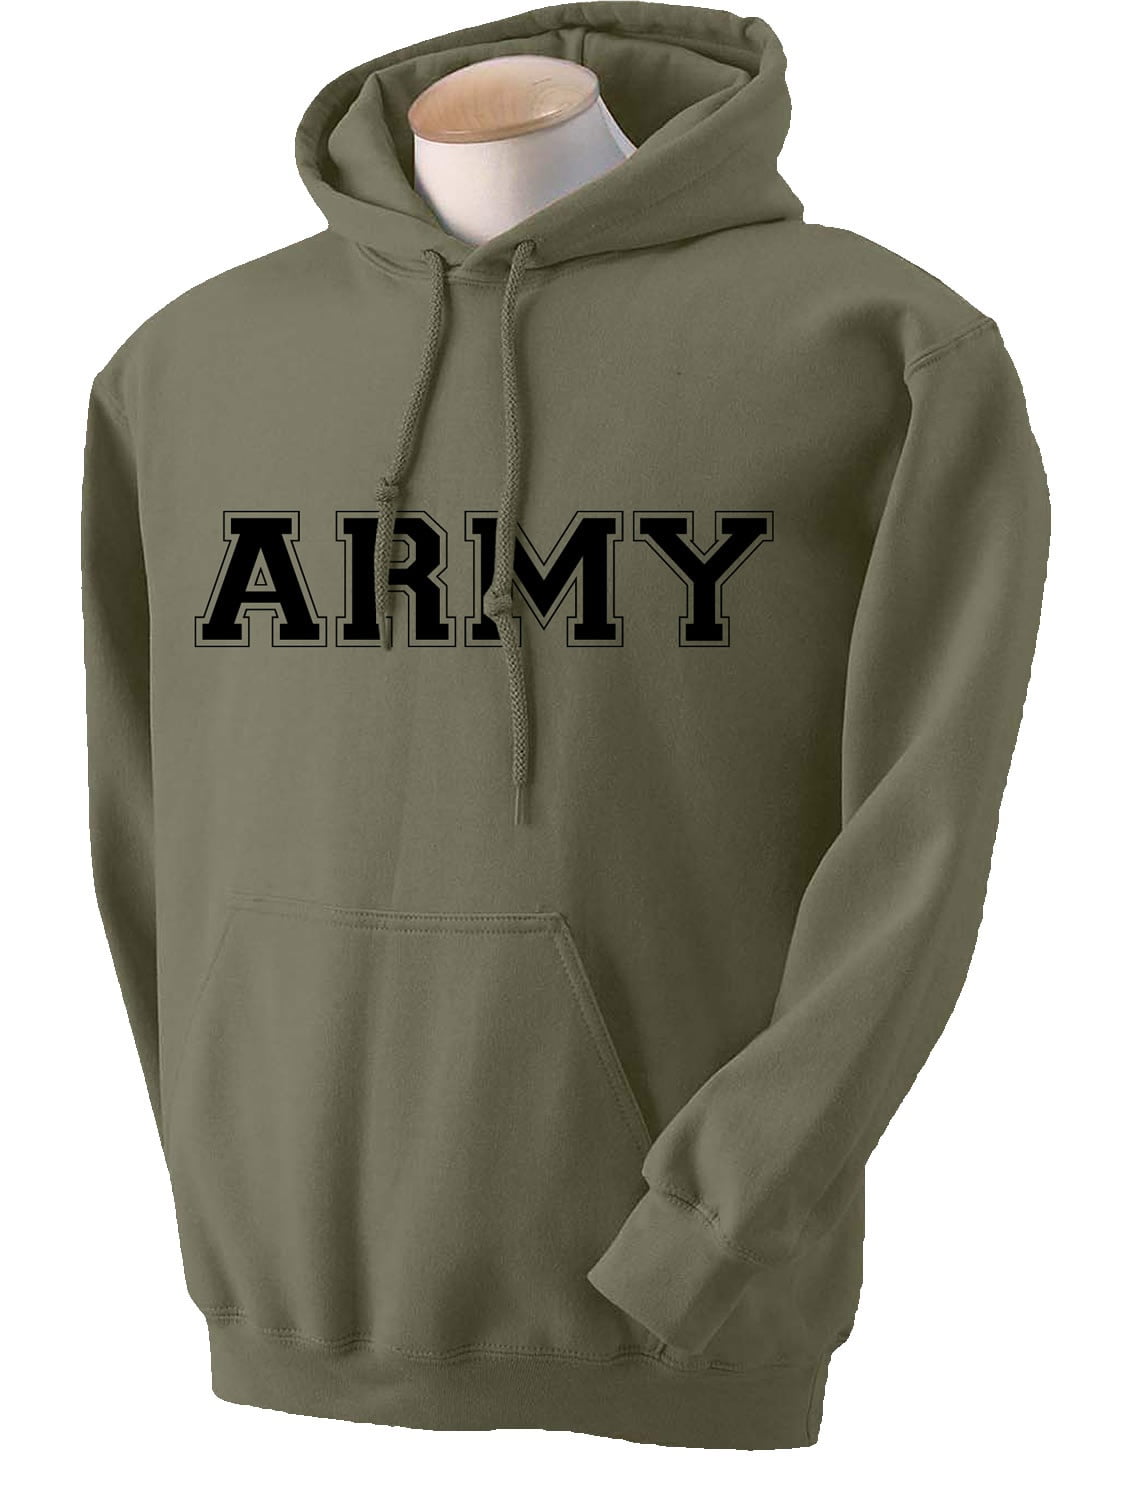 Athletic ARMY Hooded Sweatshirt in Military Green - Walmart.com